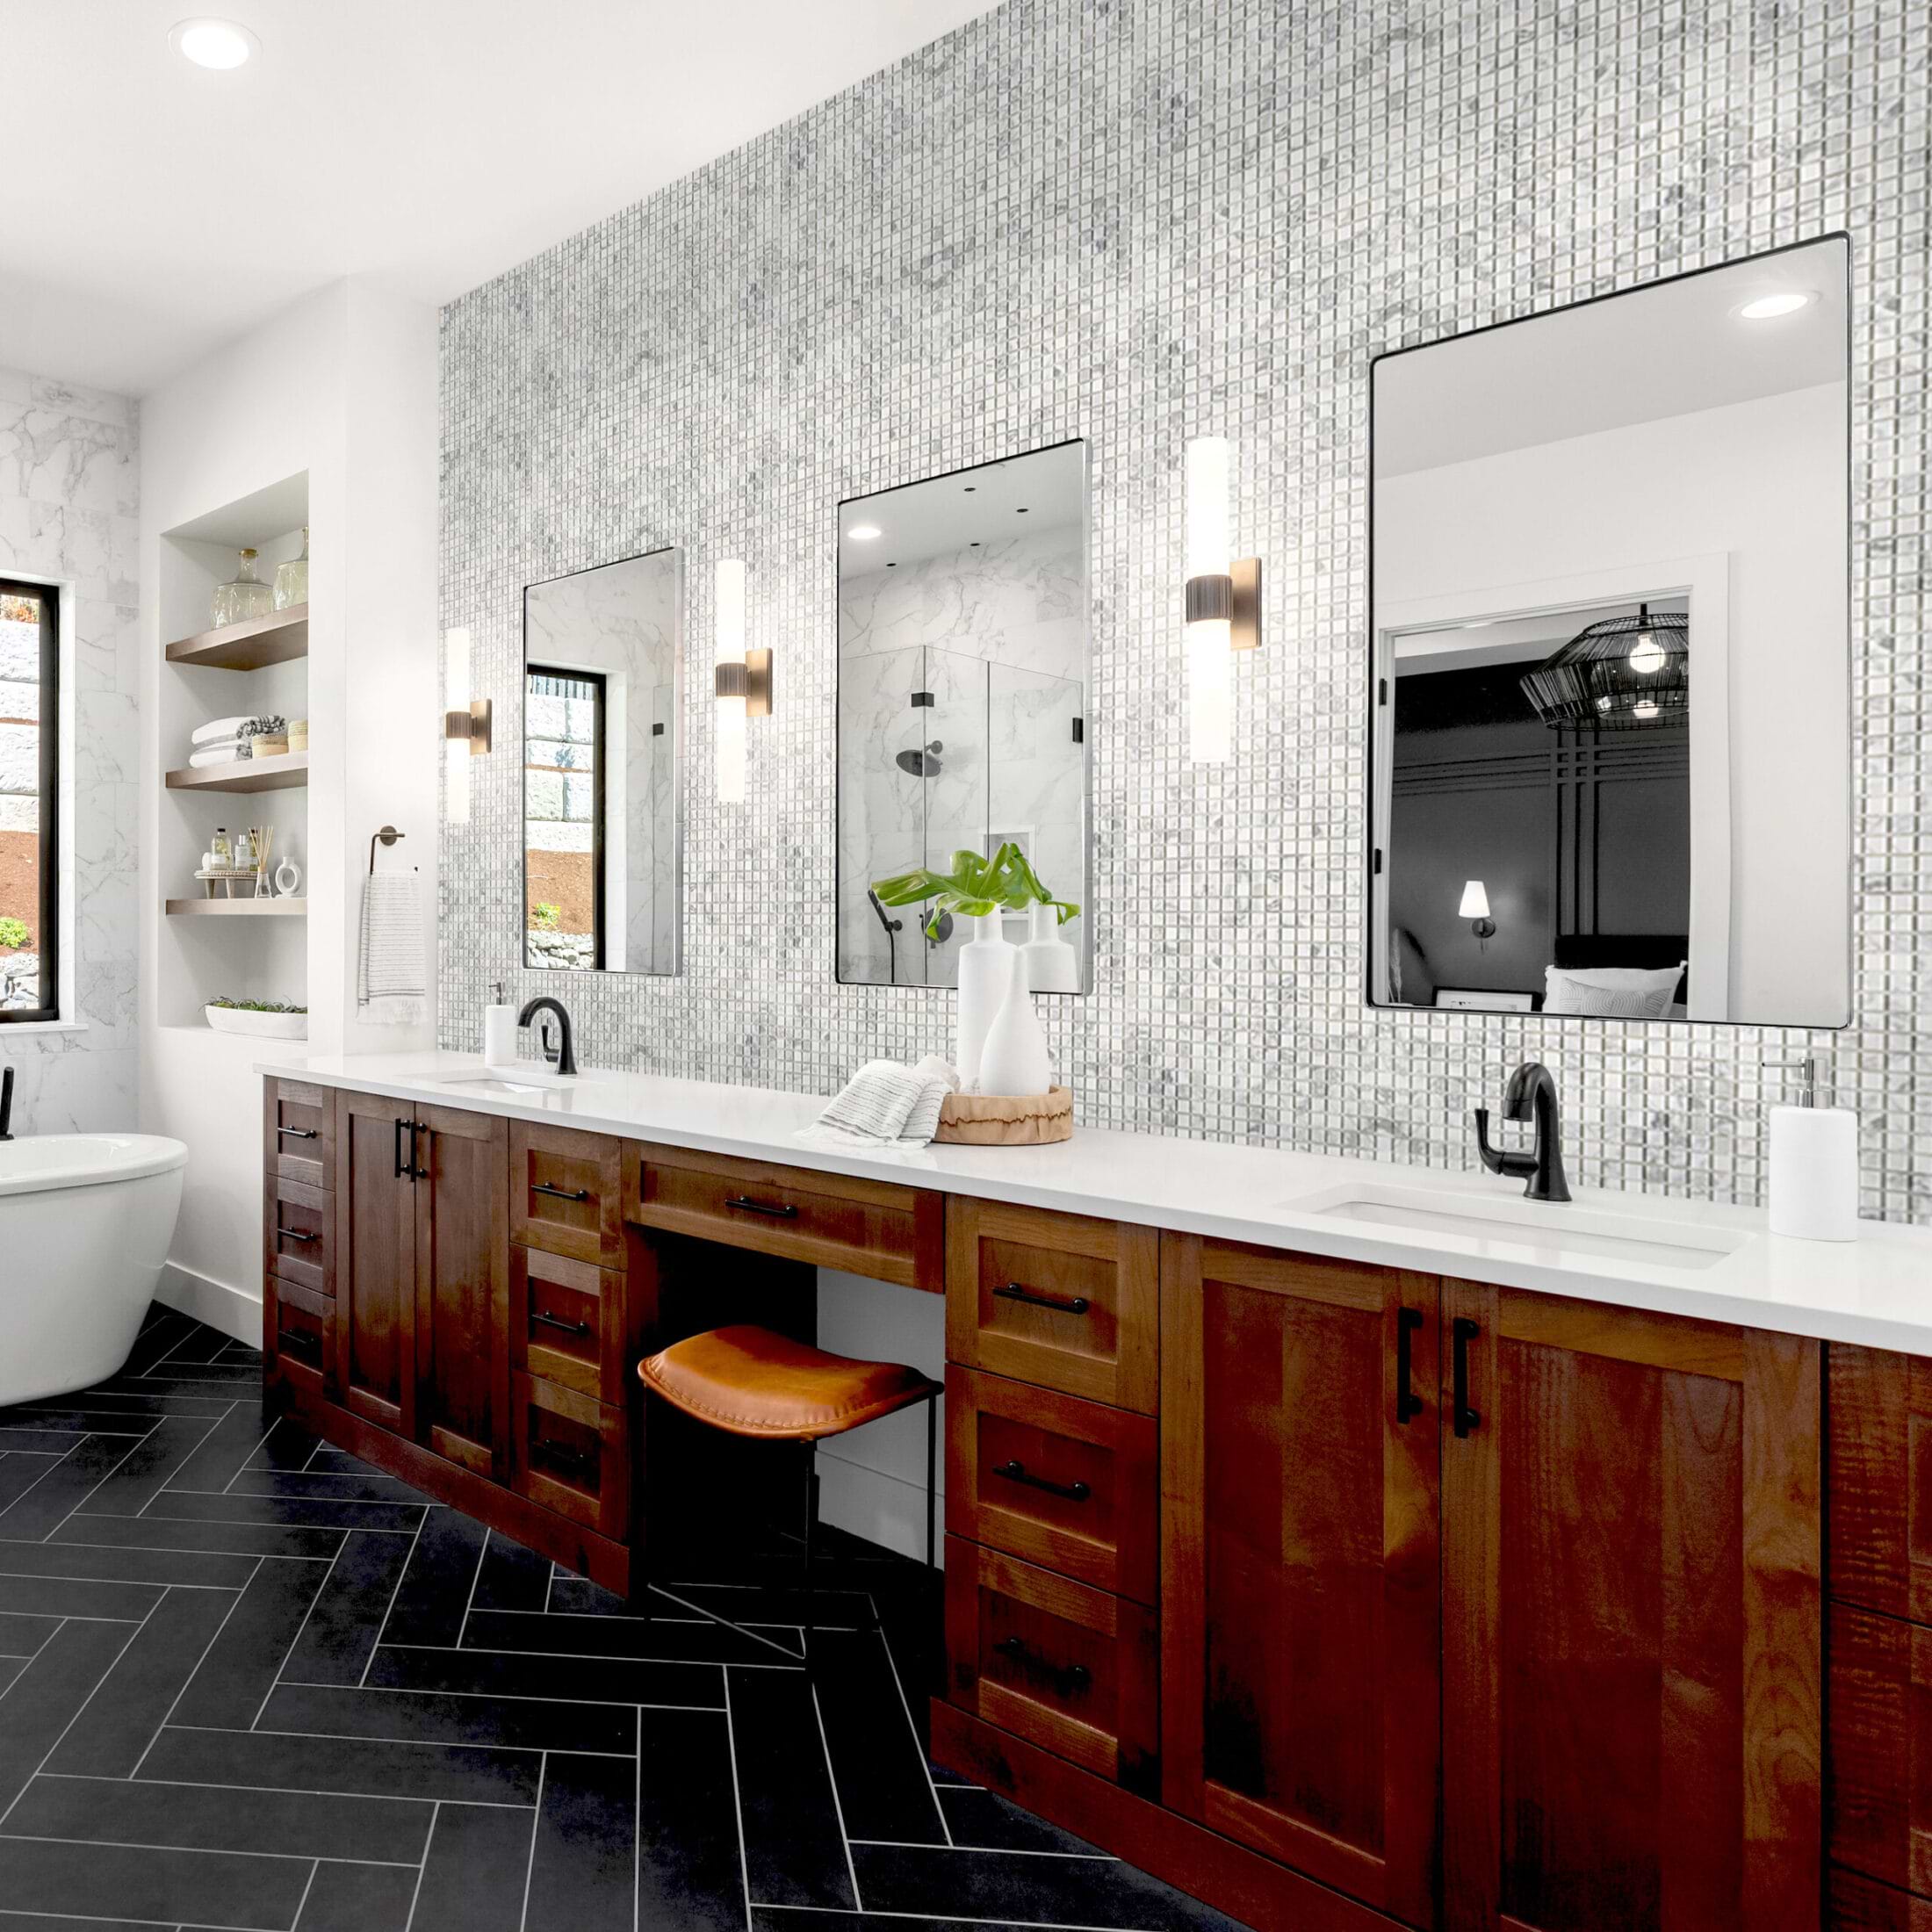 Image of bathroom with backsplash featuring square mosaics